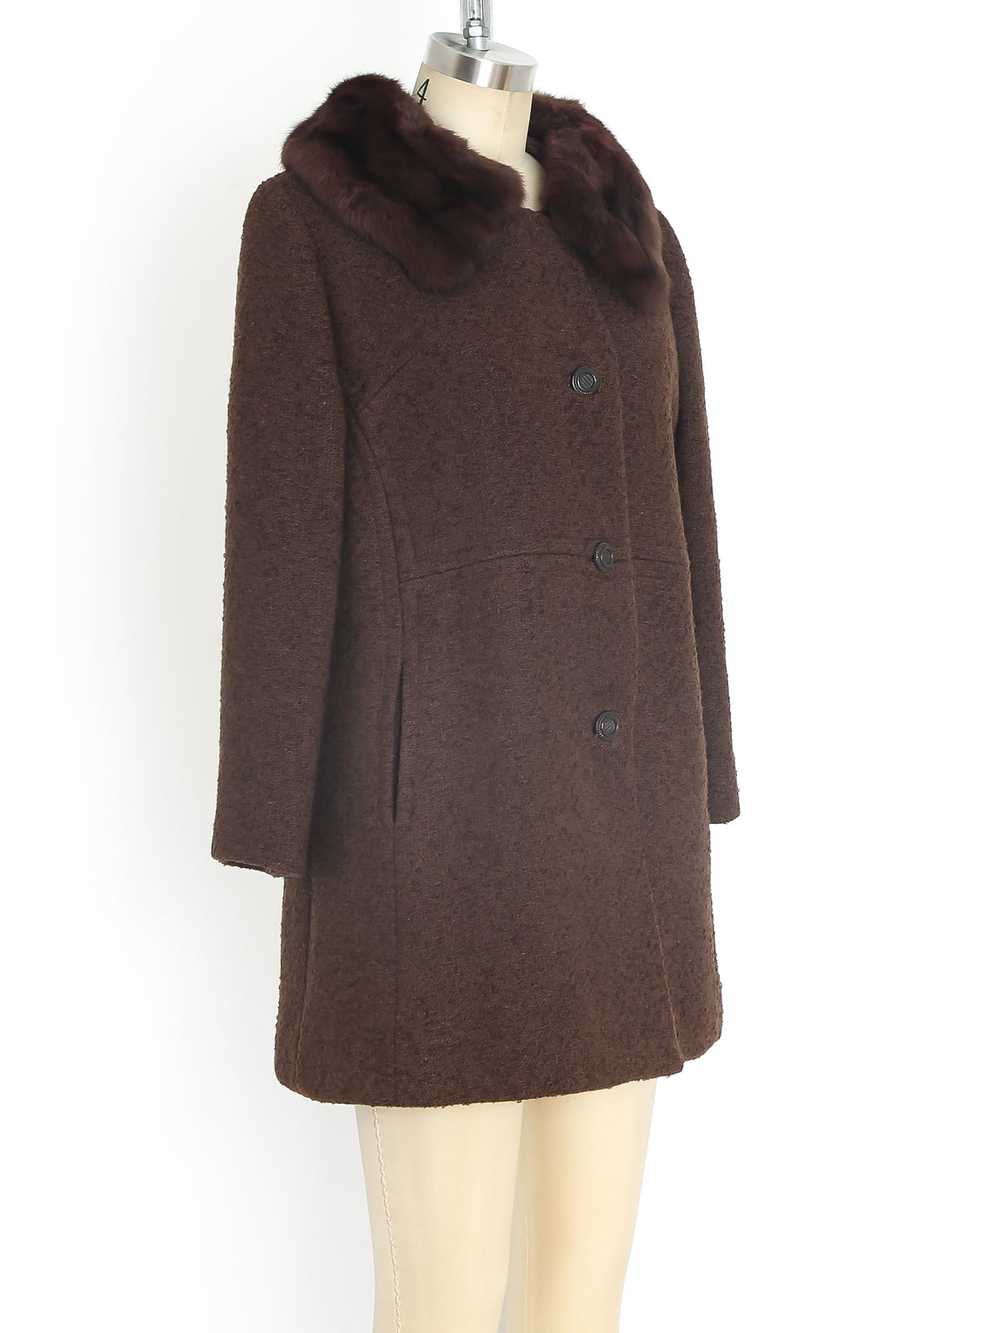 1960's Tweed Jacket with Fur Collar - image 3